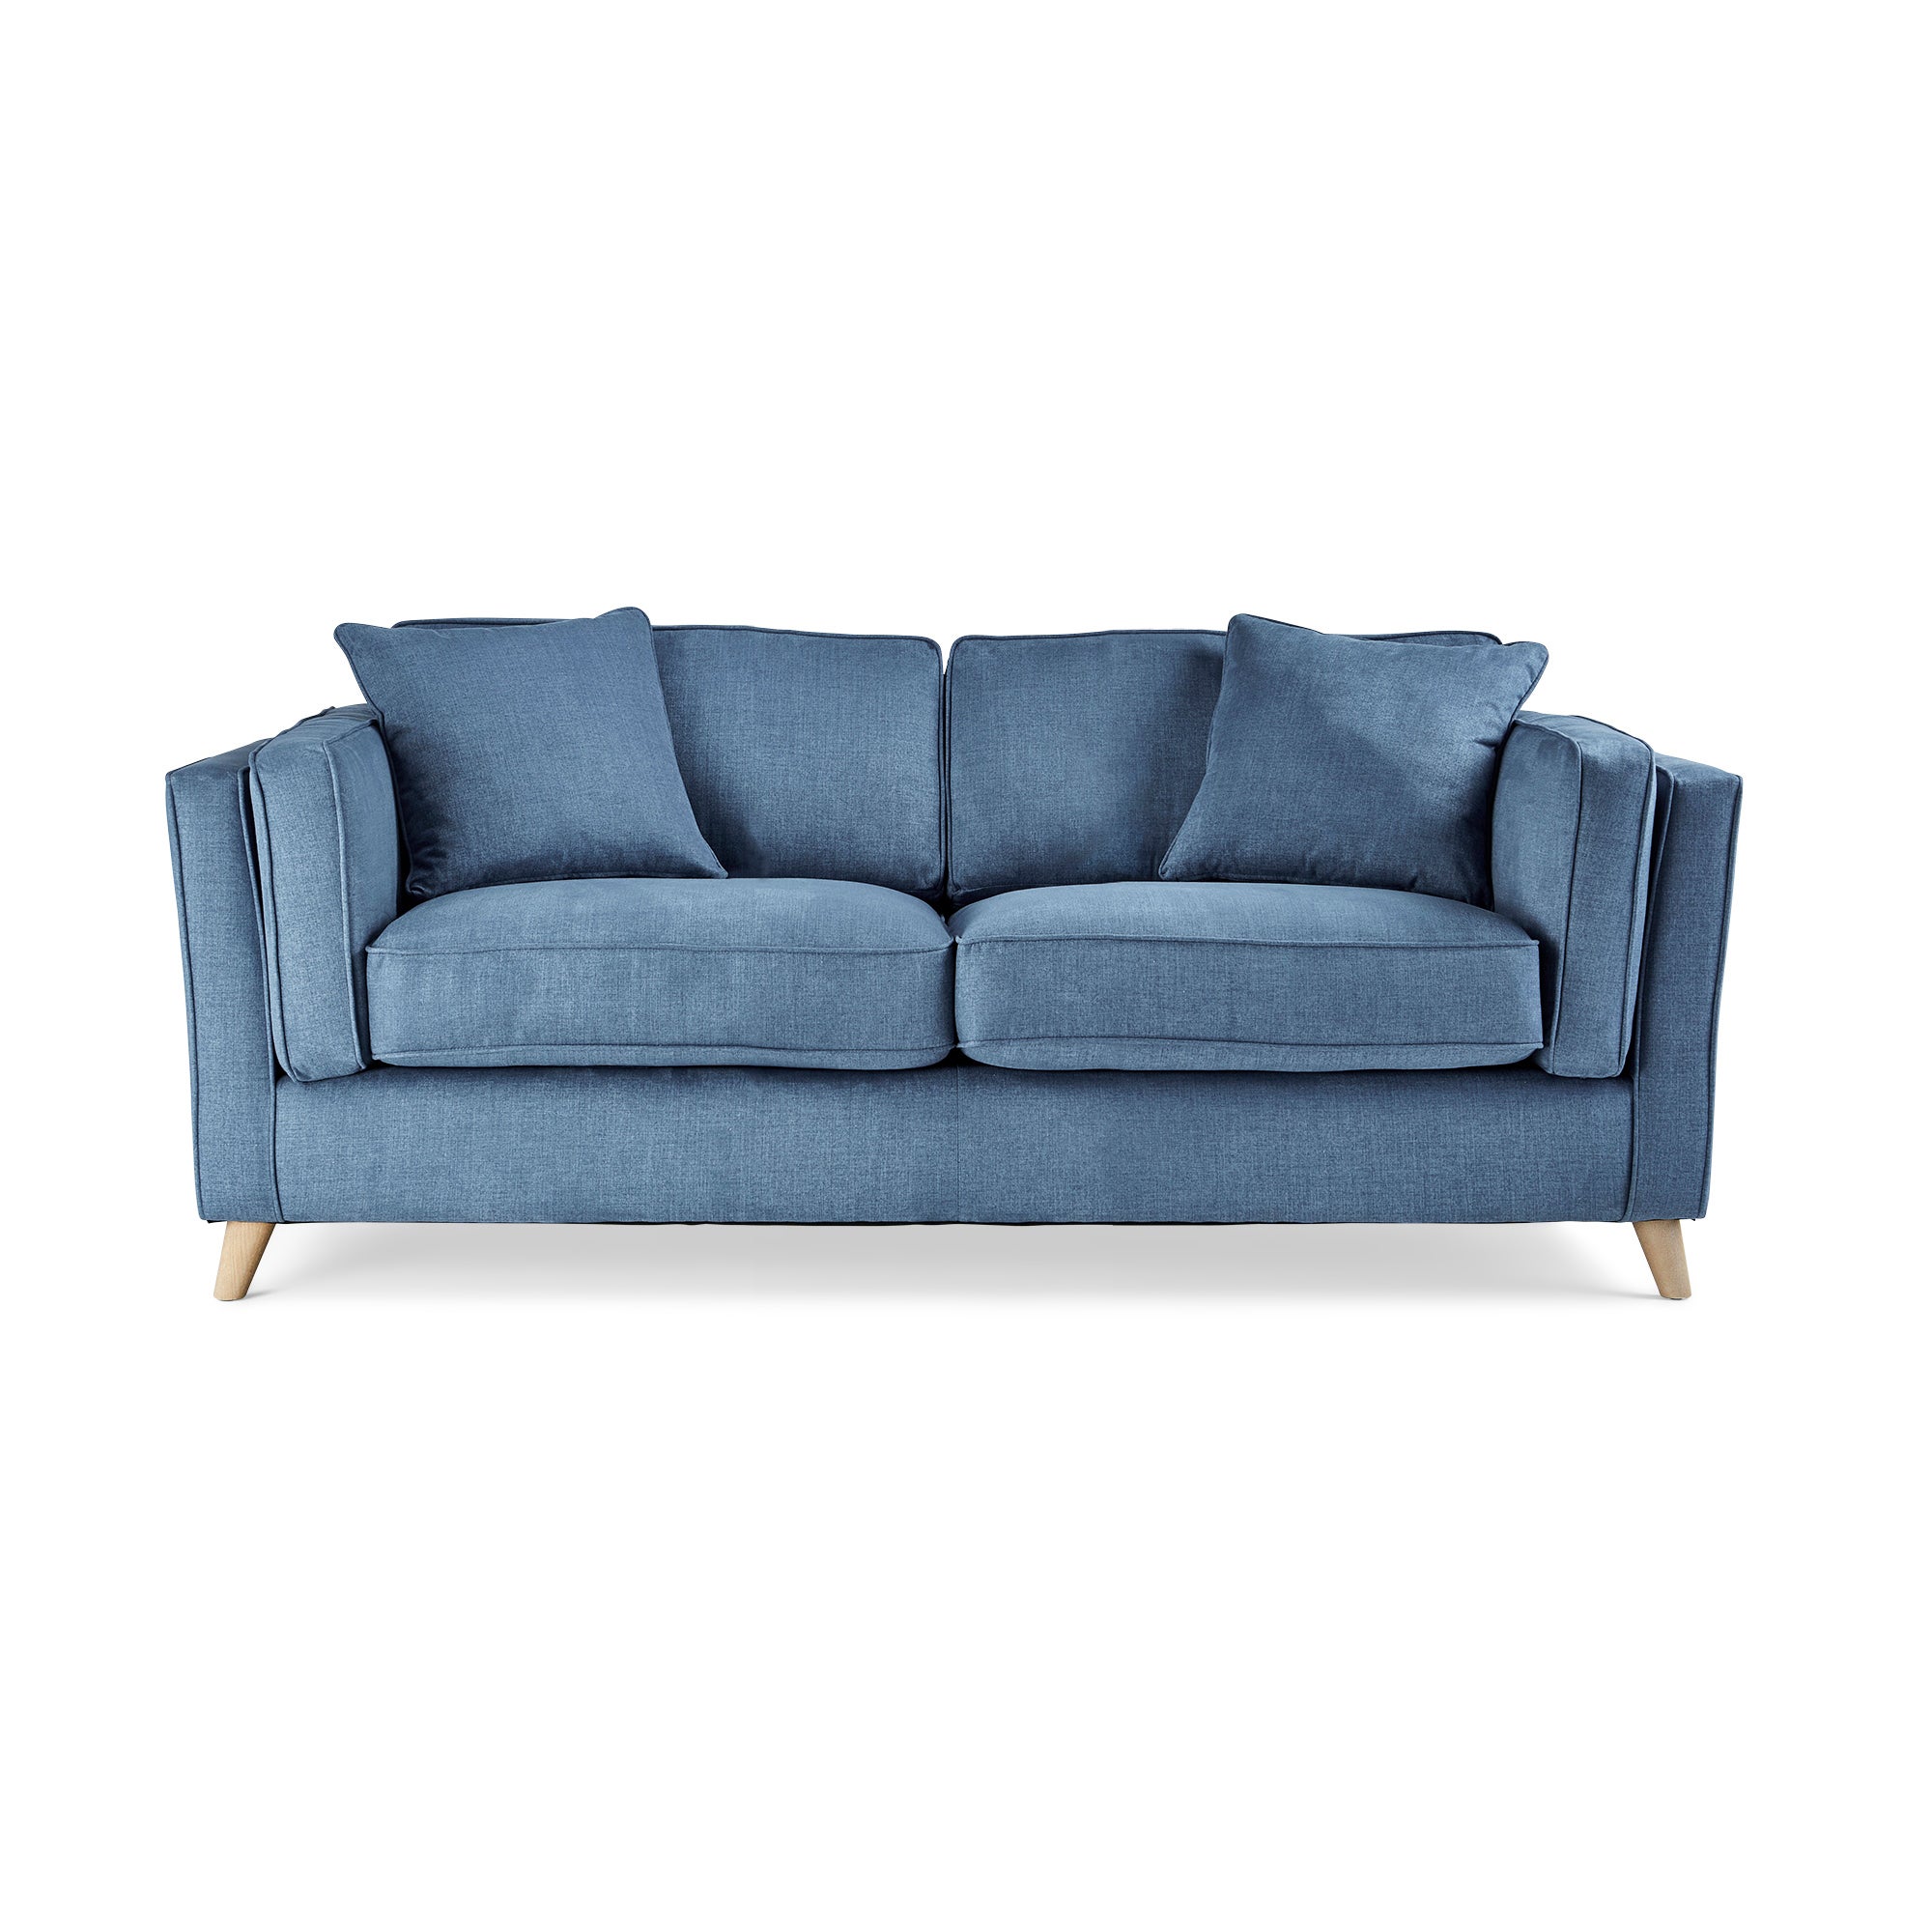 Arabella 2 Seater Sofa Blue